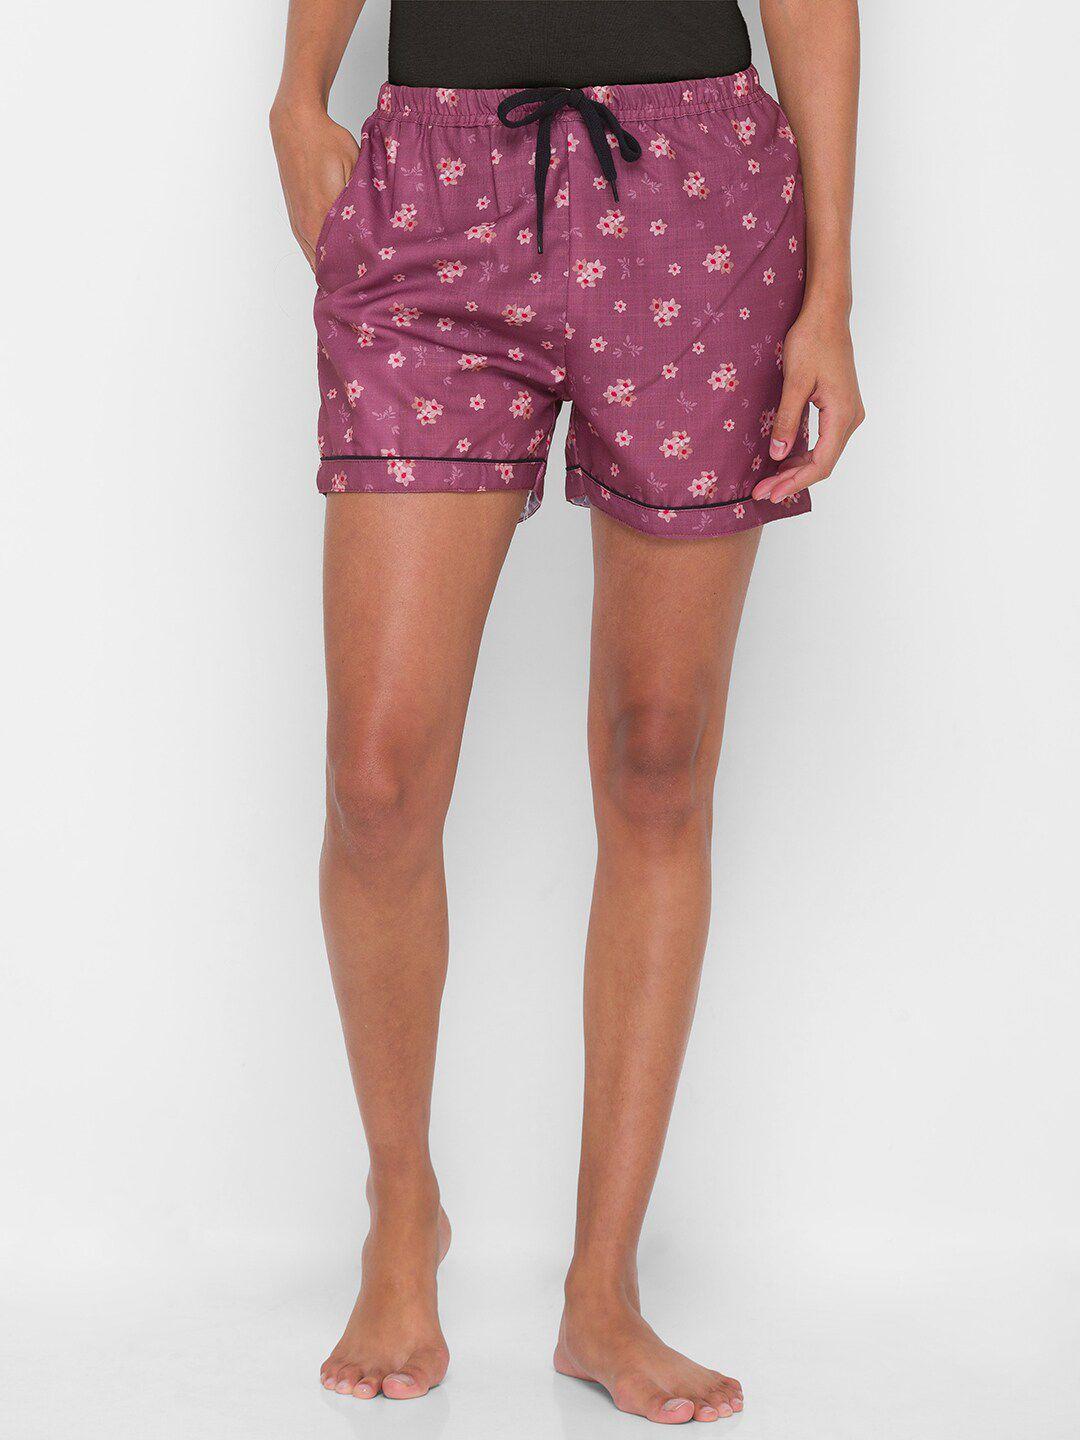 fashionrack women purple & black printed lounge shorts